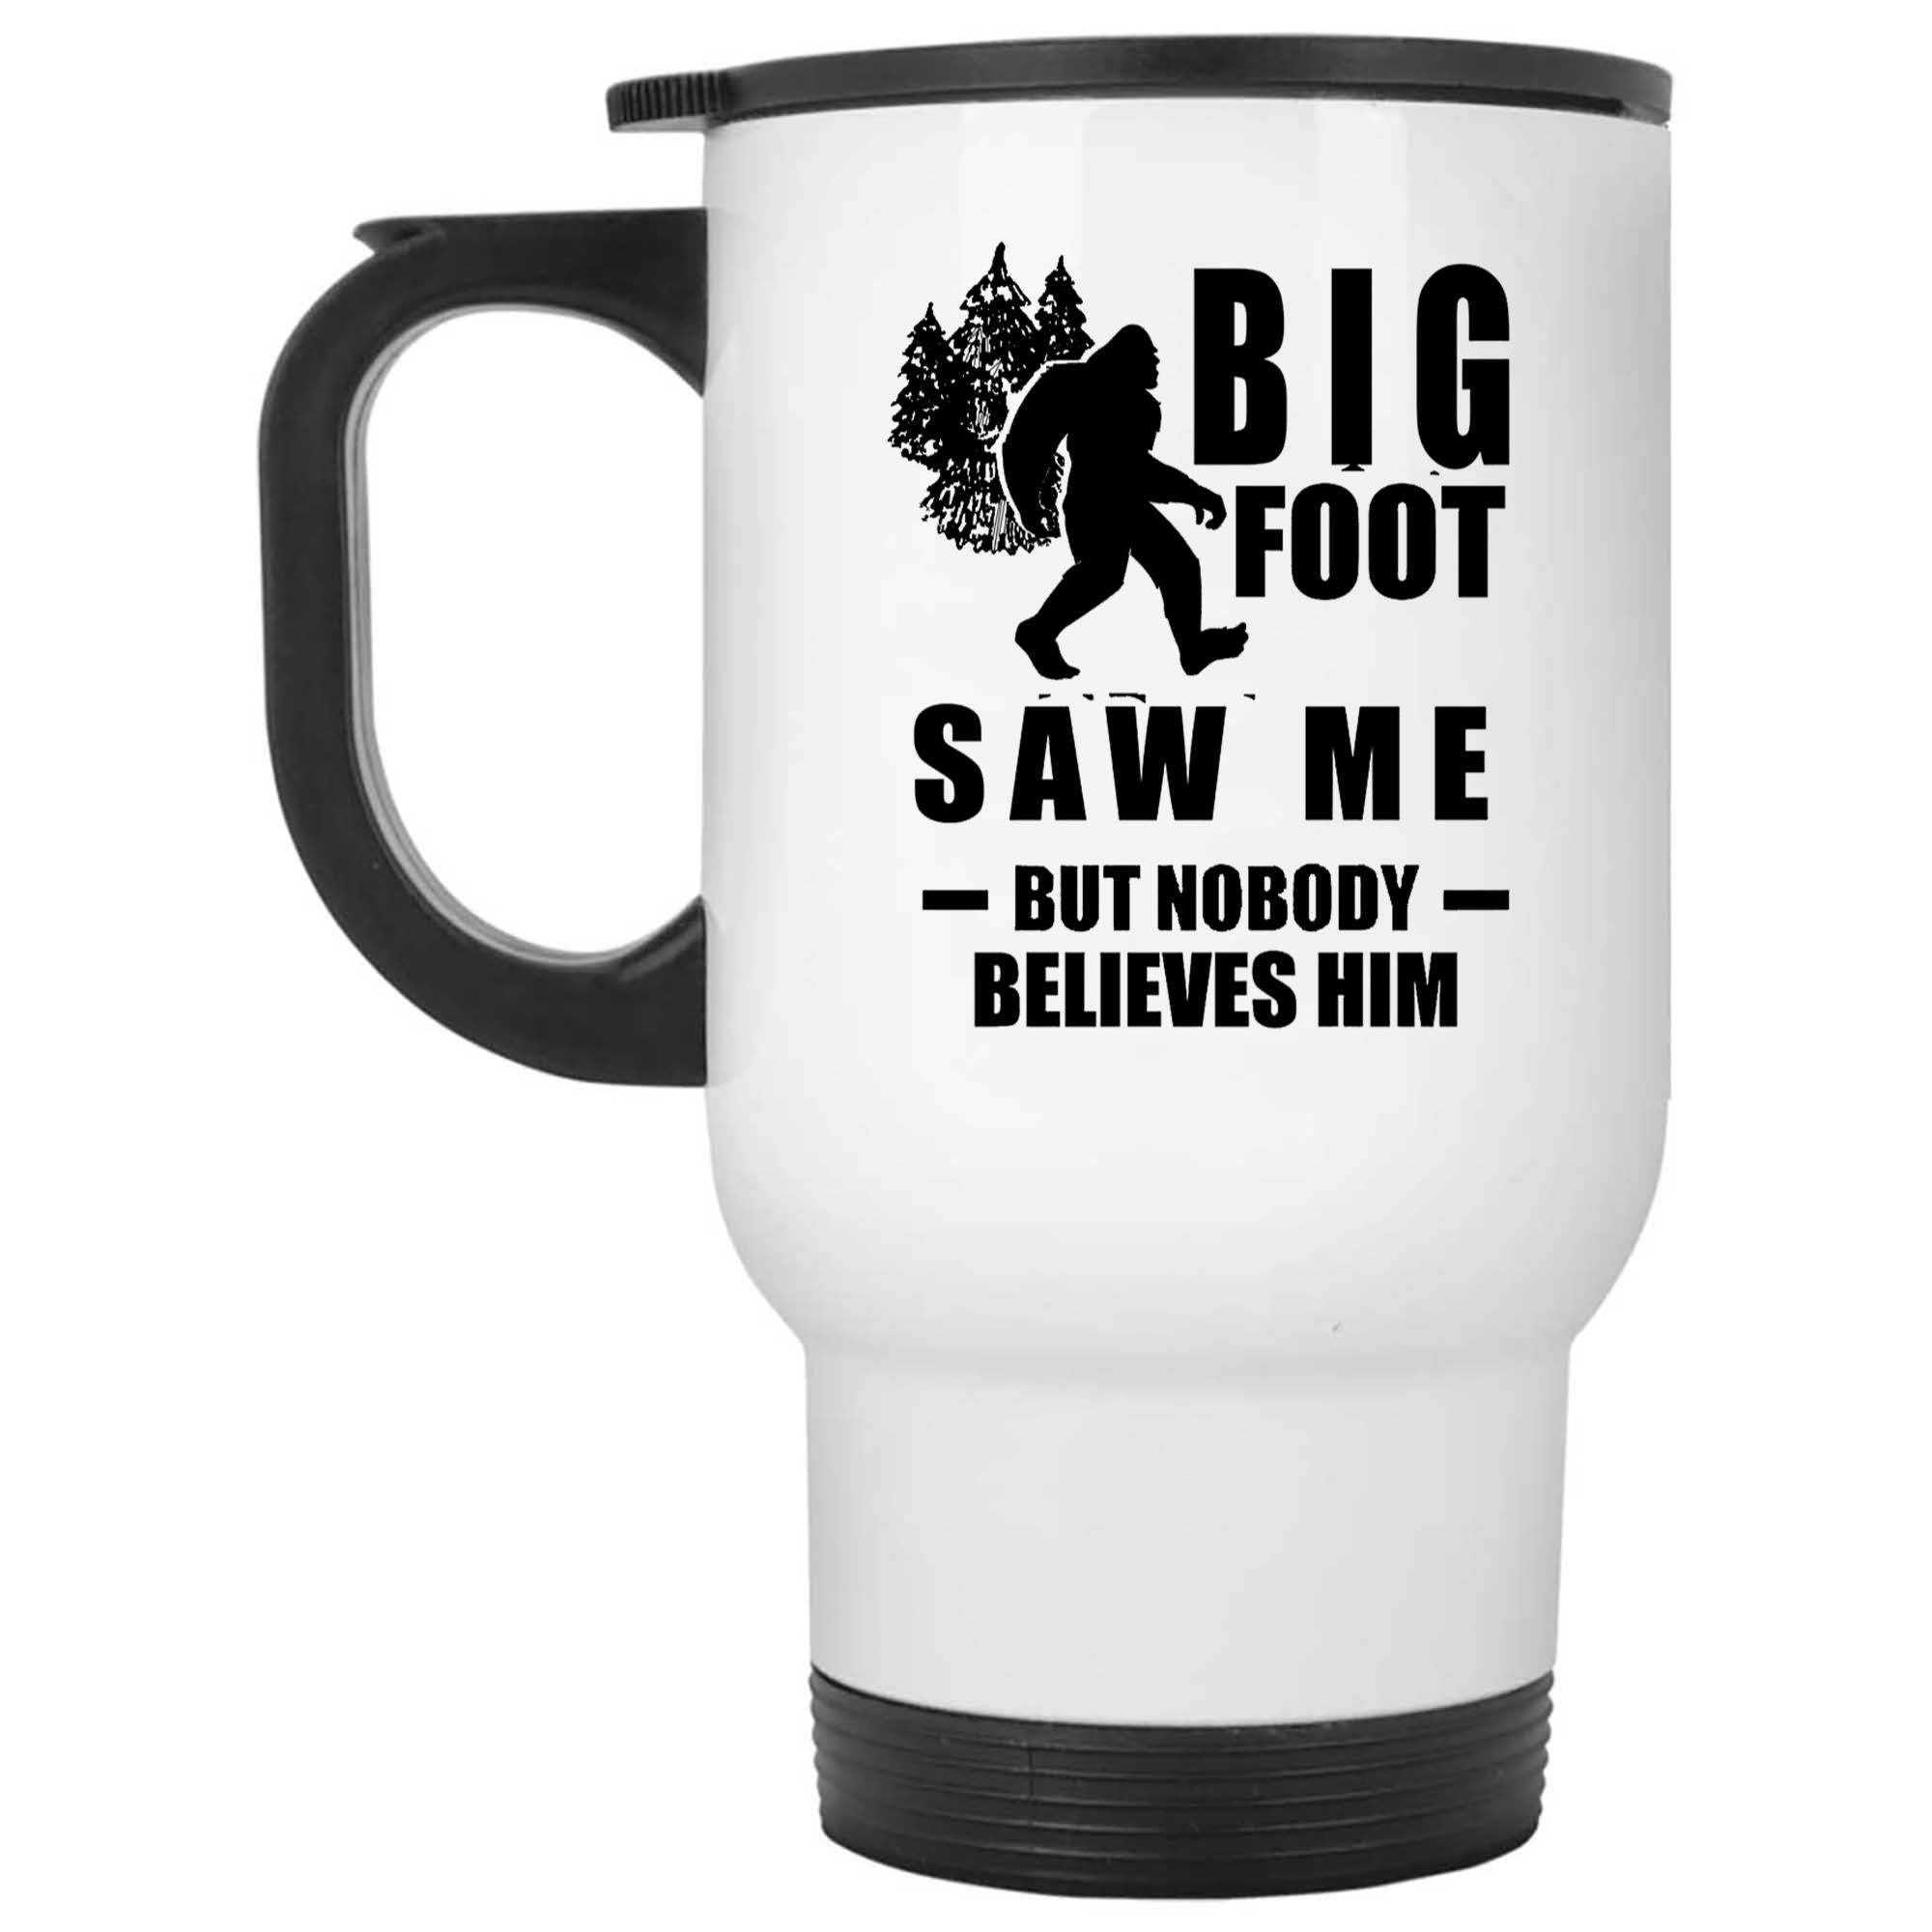 Skitongifts Funny Ceramic Novelty Coffee Mug Bigfoot Saw Me But Nobody Believes Him Funny IxbJLYa